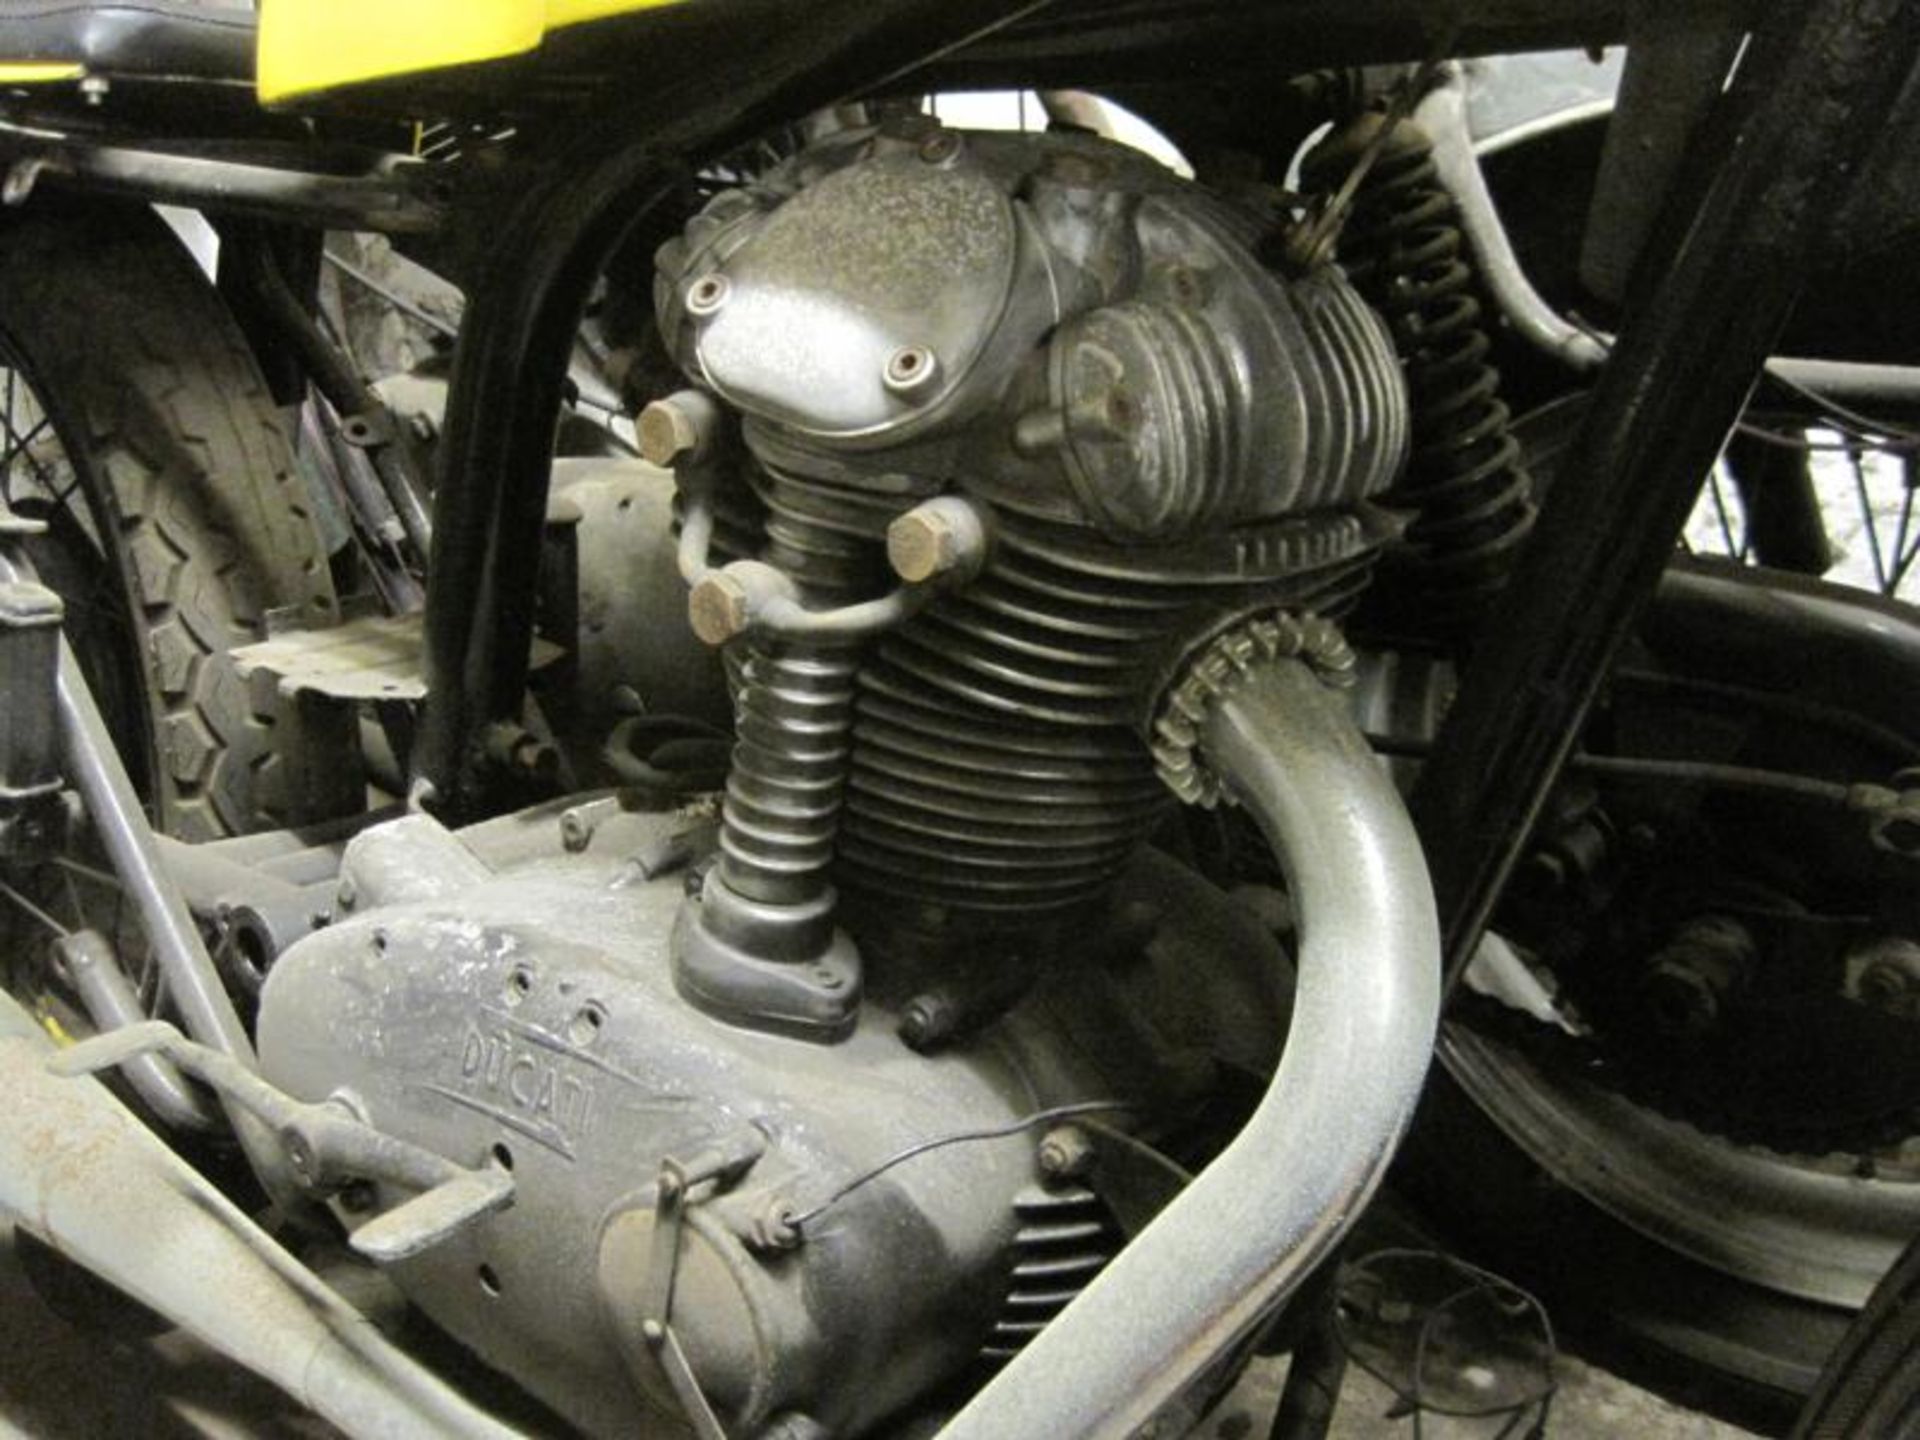 1971 350cc Ducati (Sebring) Reg. No. OCU 48J Frame No. Not found Engine No. DM350 04607 Purchased in - Image 4 of 7